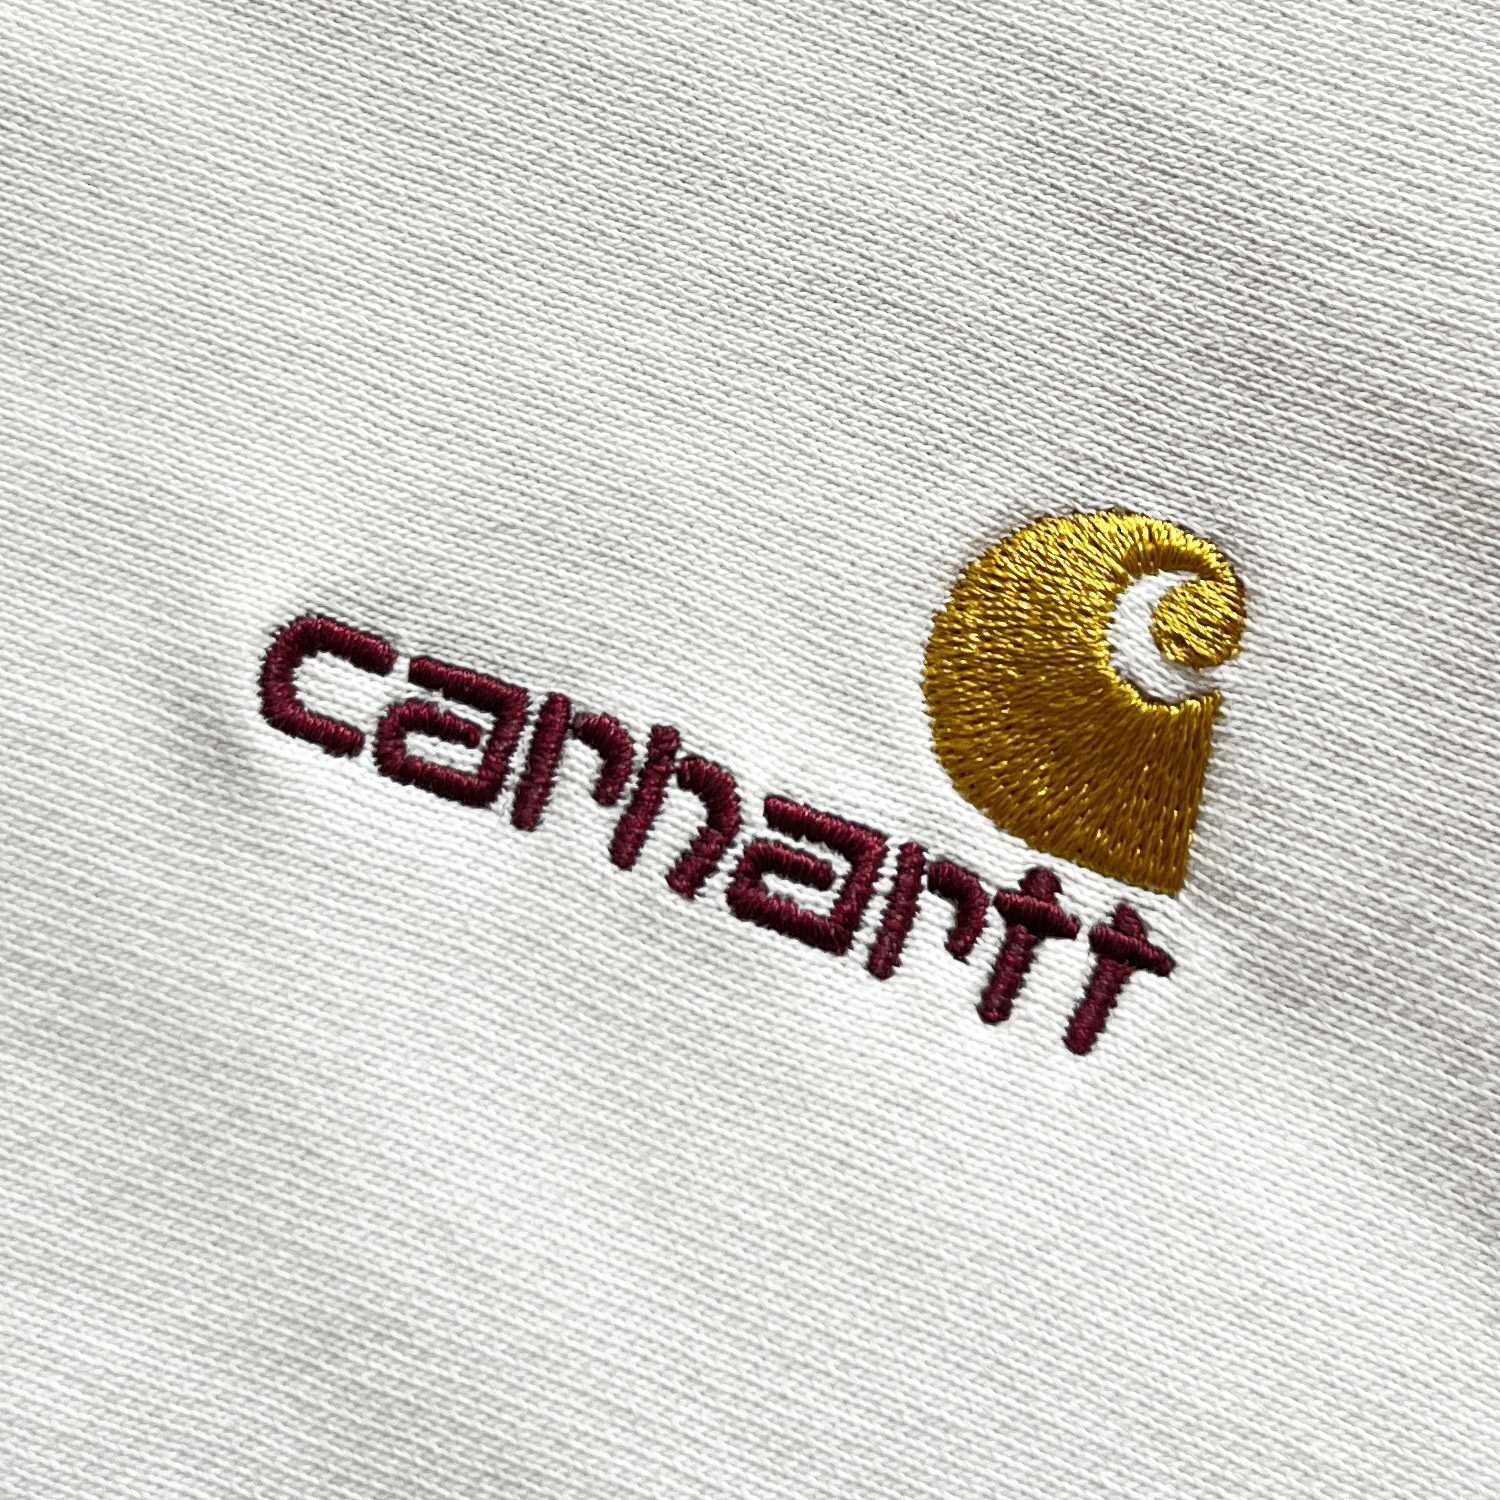 Блуза Carhartt WIP Half Zip American Script Sweatshirt - Natural